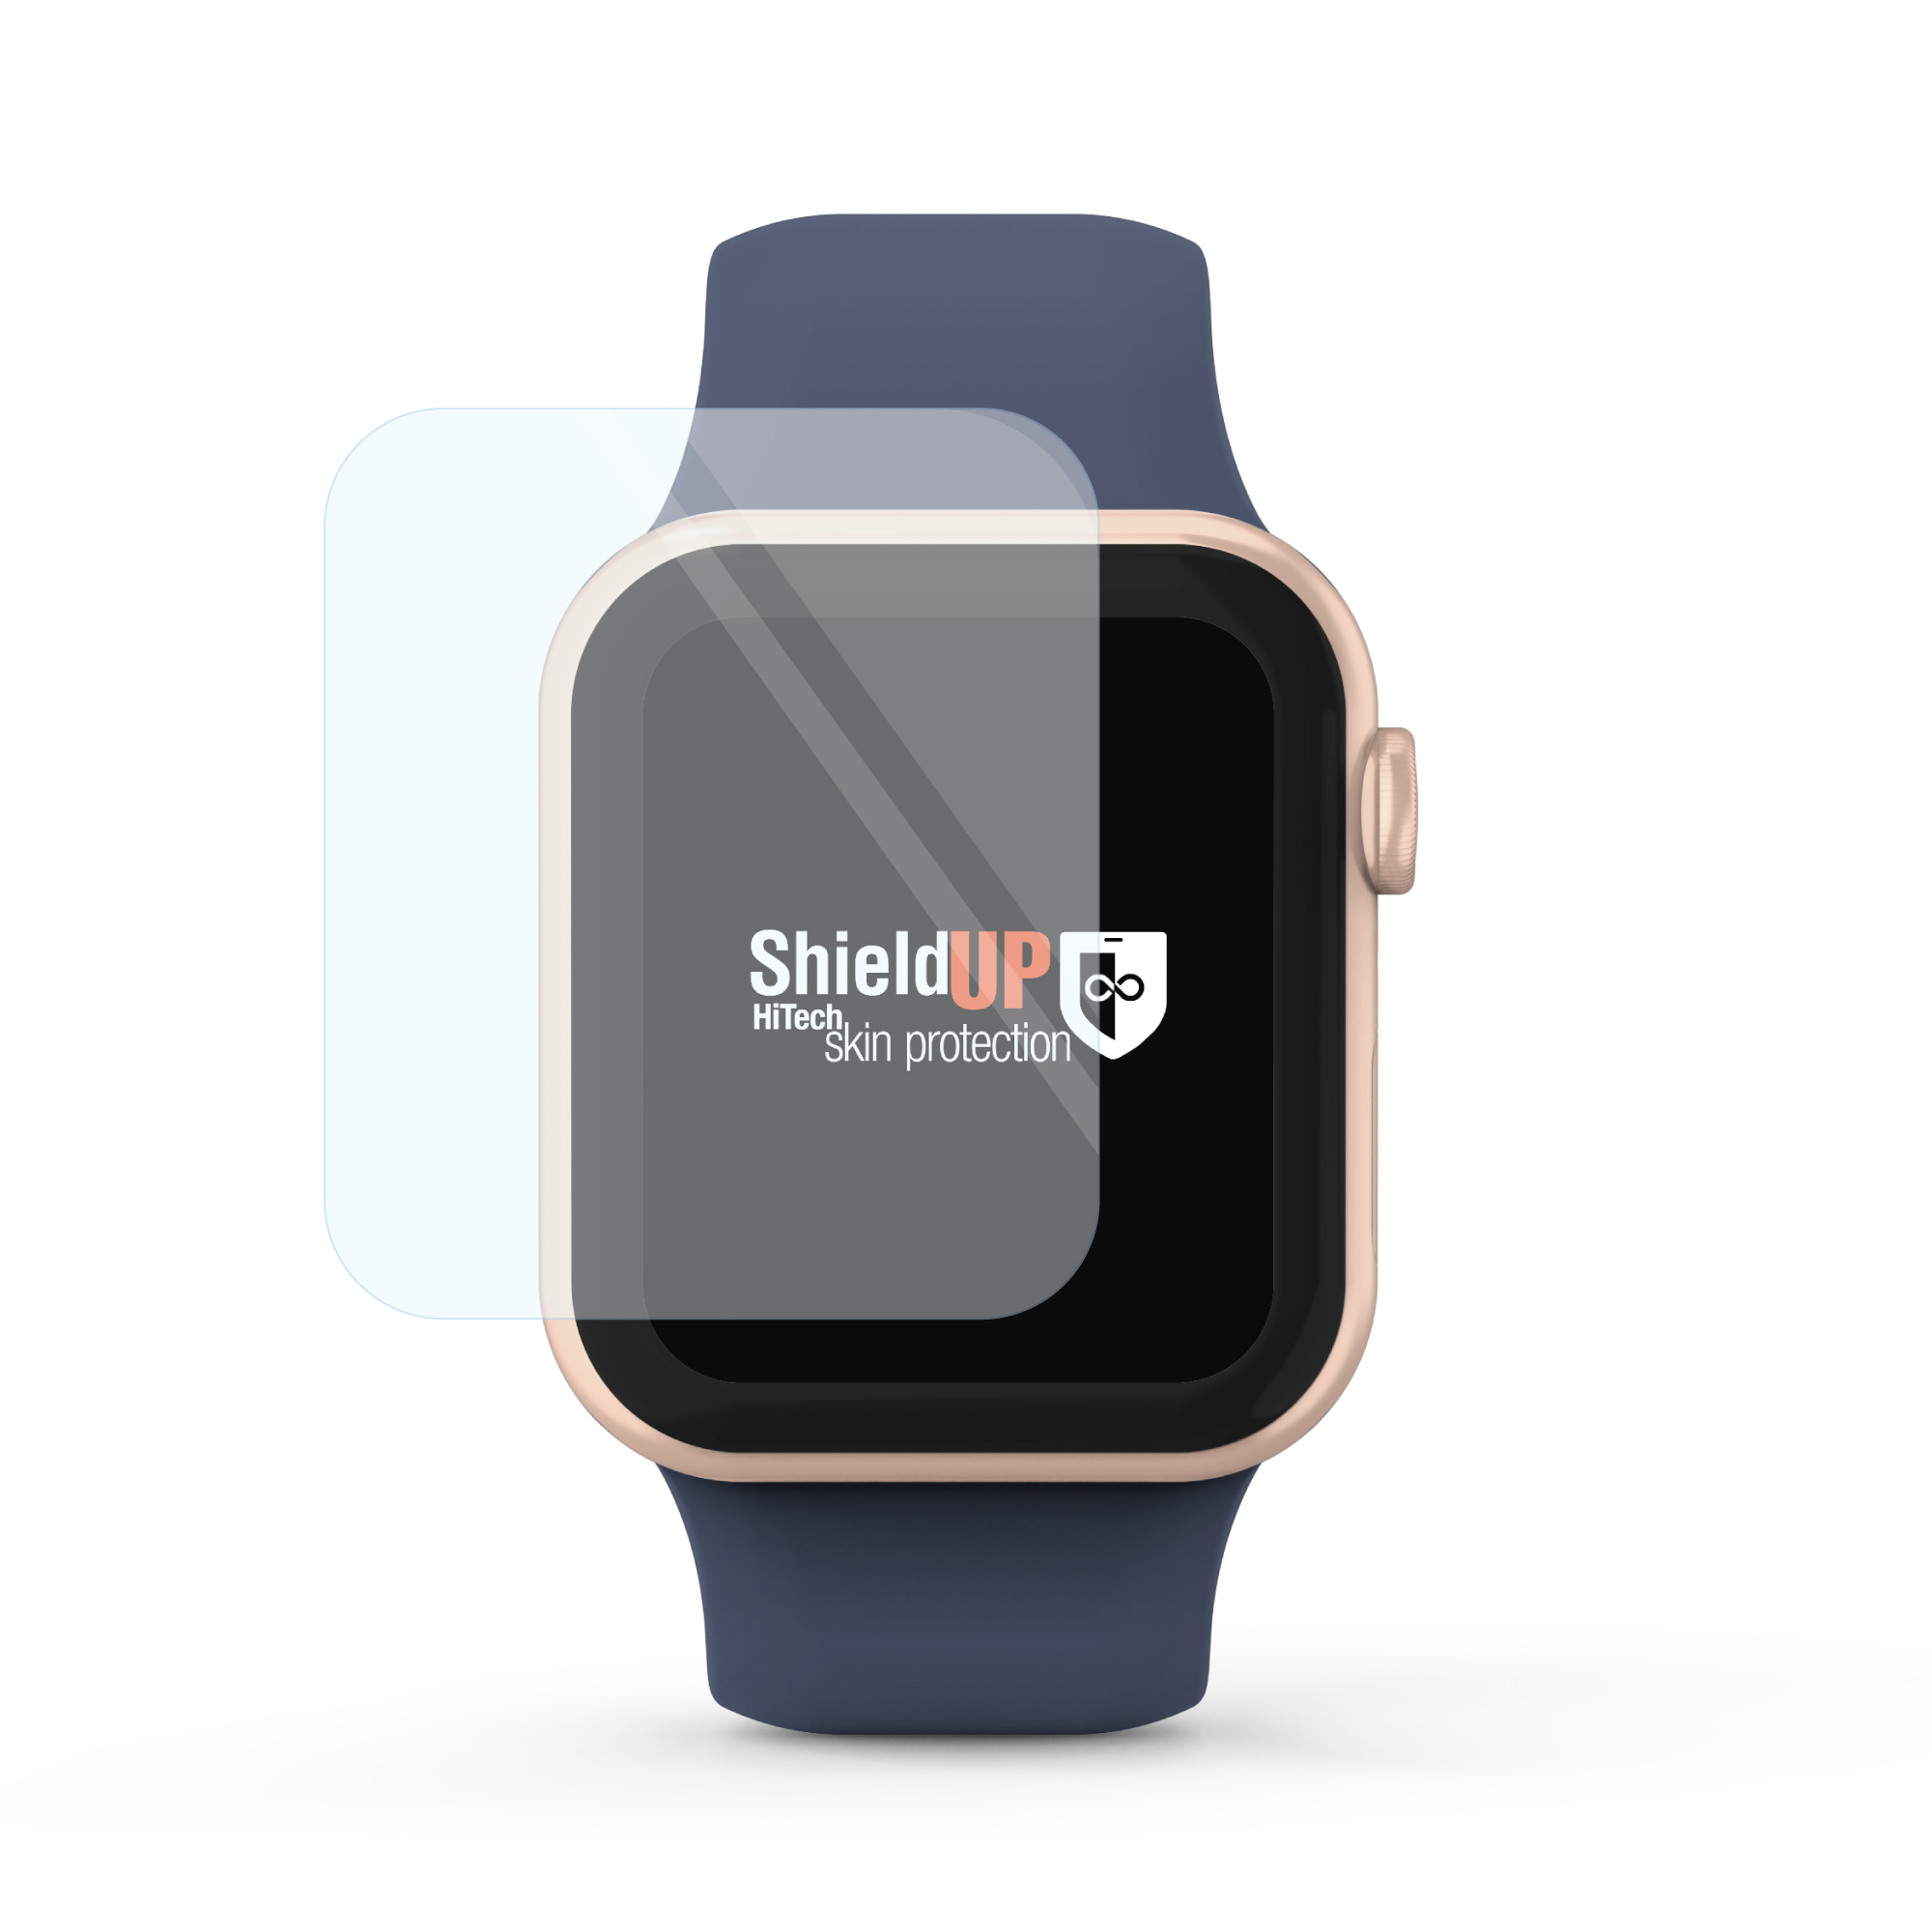 Folie de protectie silicon ShieldUP HiTech Regenerable pentru Smartwatch SIGLA thumb